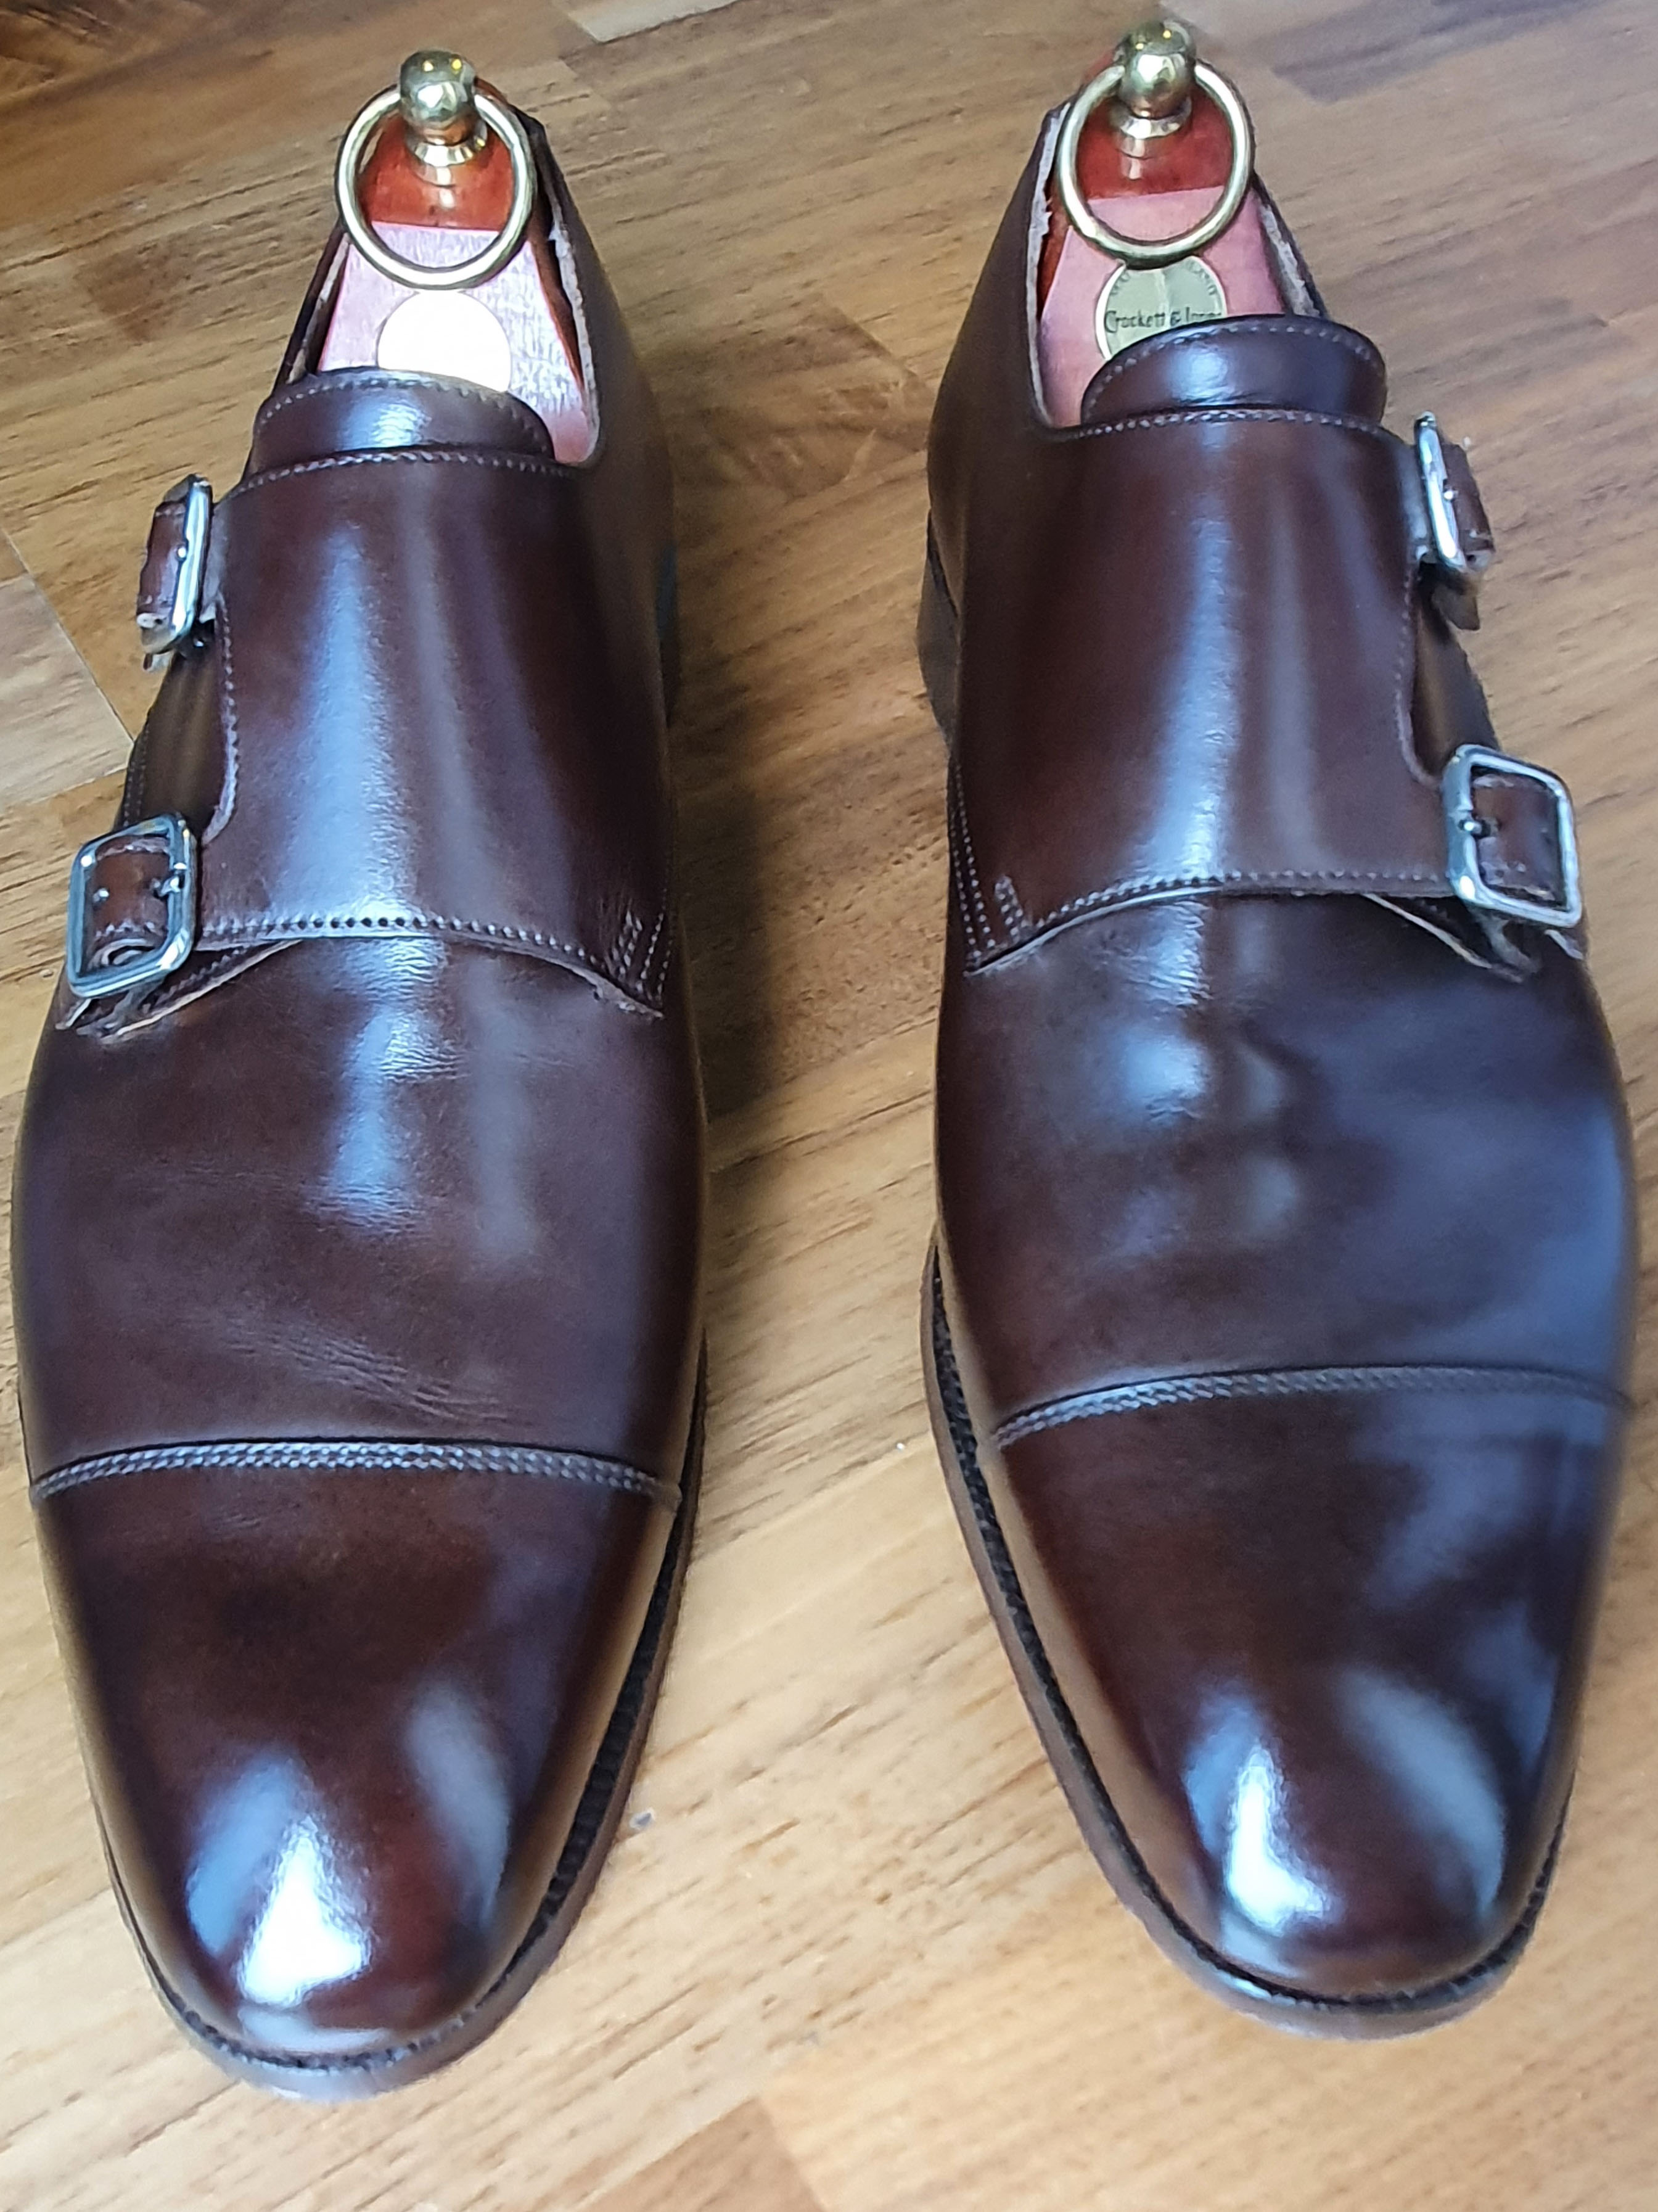 Restored, shiny pair of brown Crockett & Jones double monk shoes